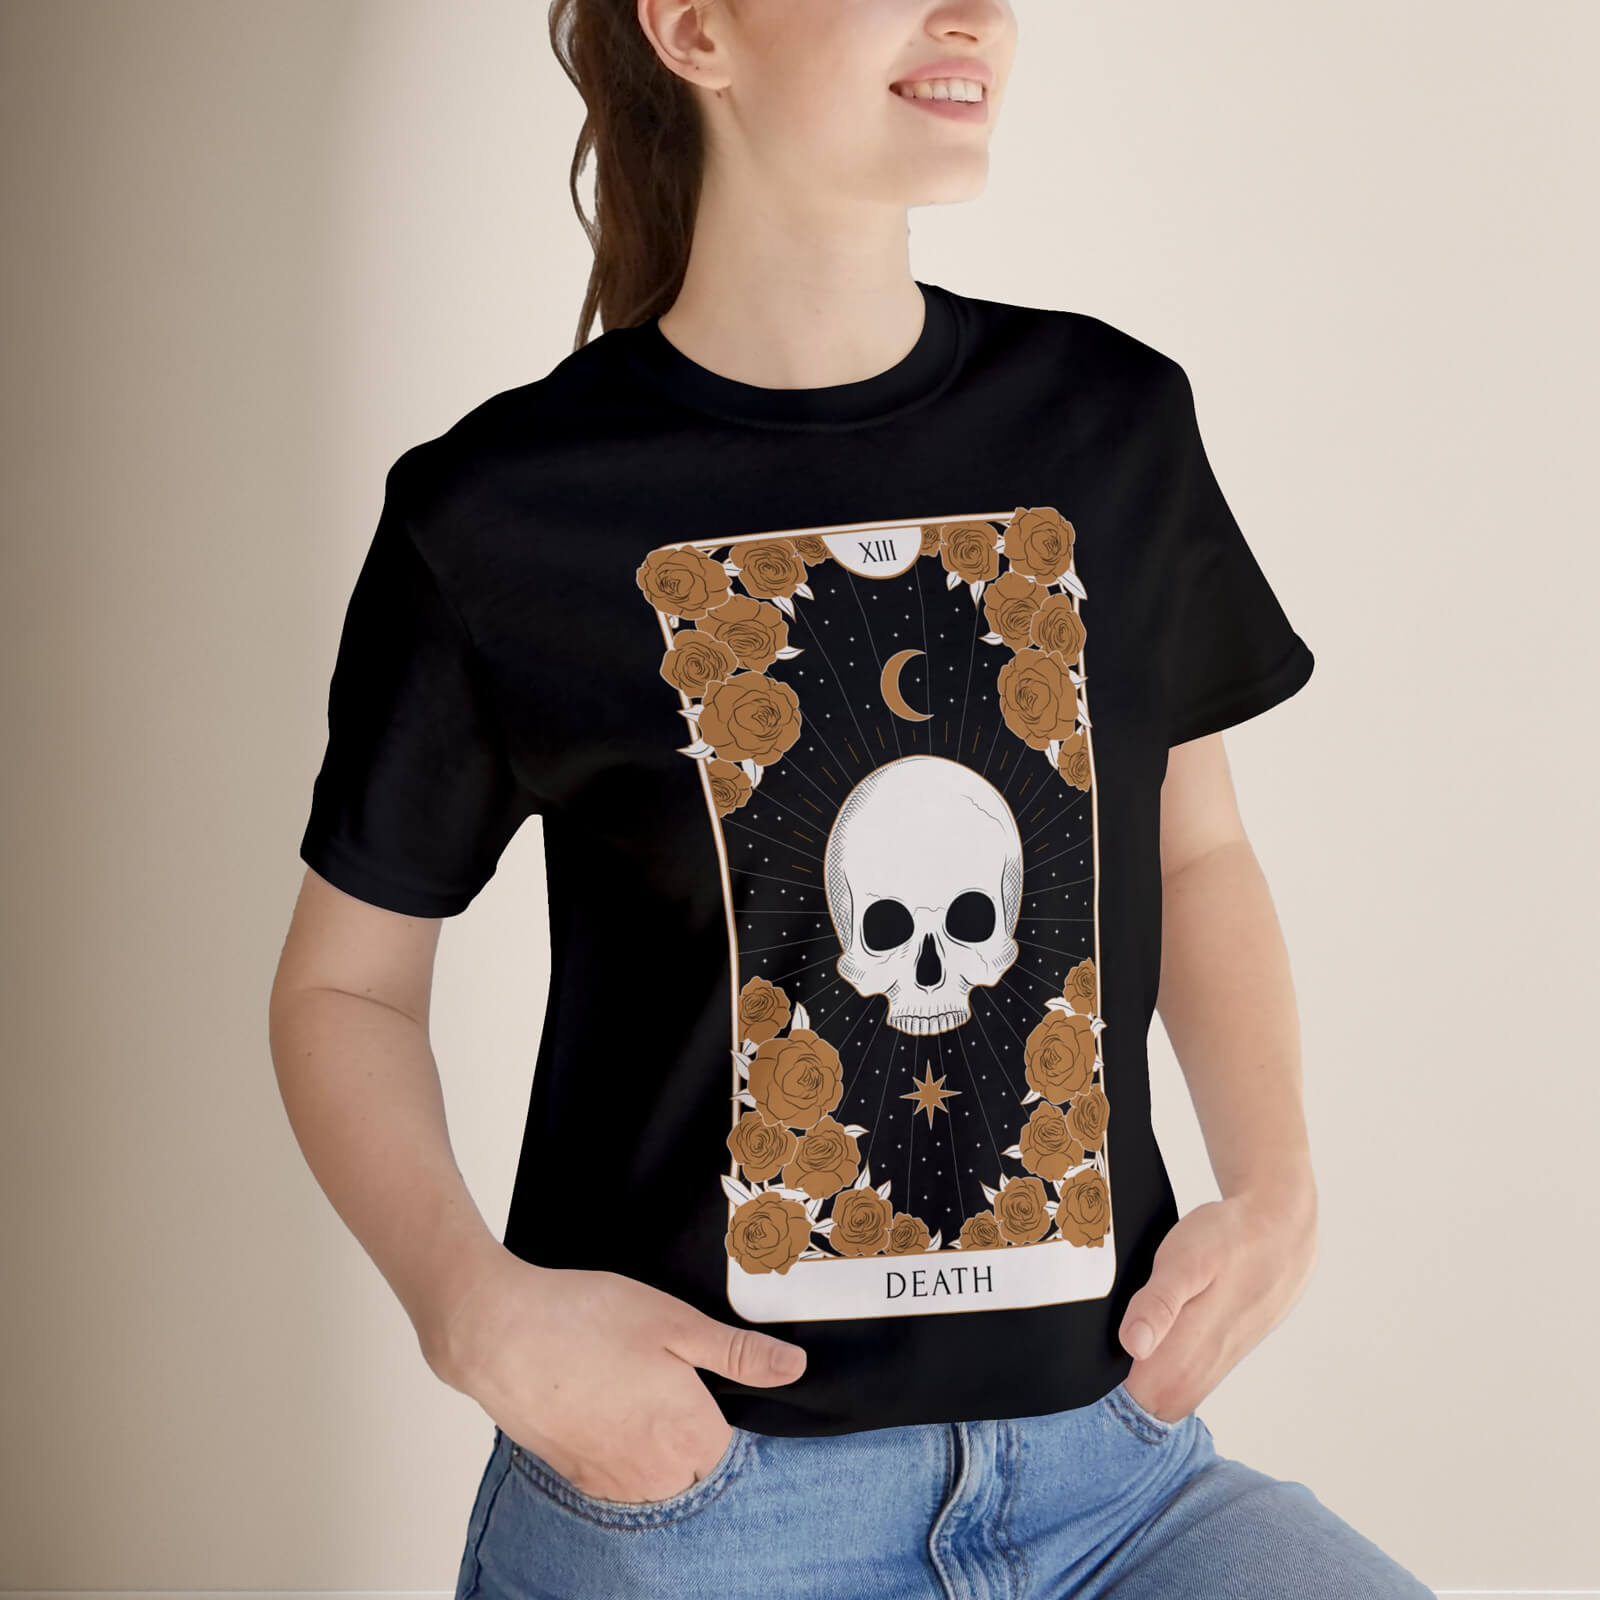 Stellar-Skeleton-Tarot-Cards-Tee-Tarot-Card-T-Shirt-Death